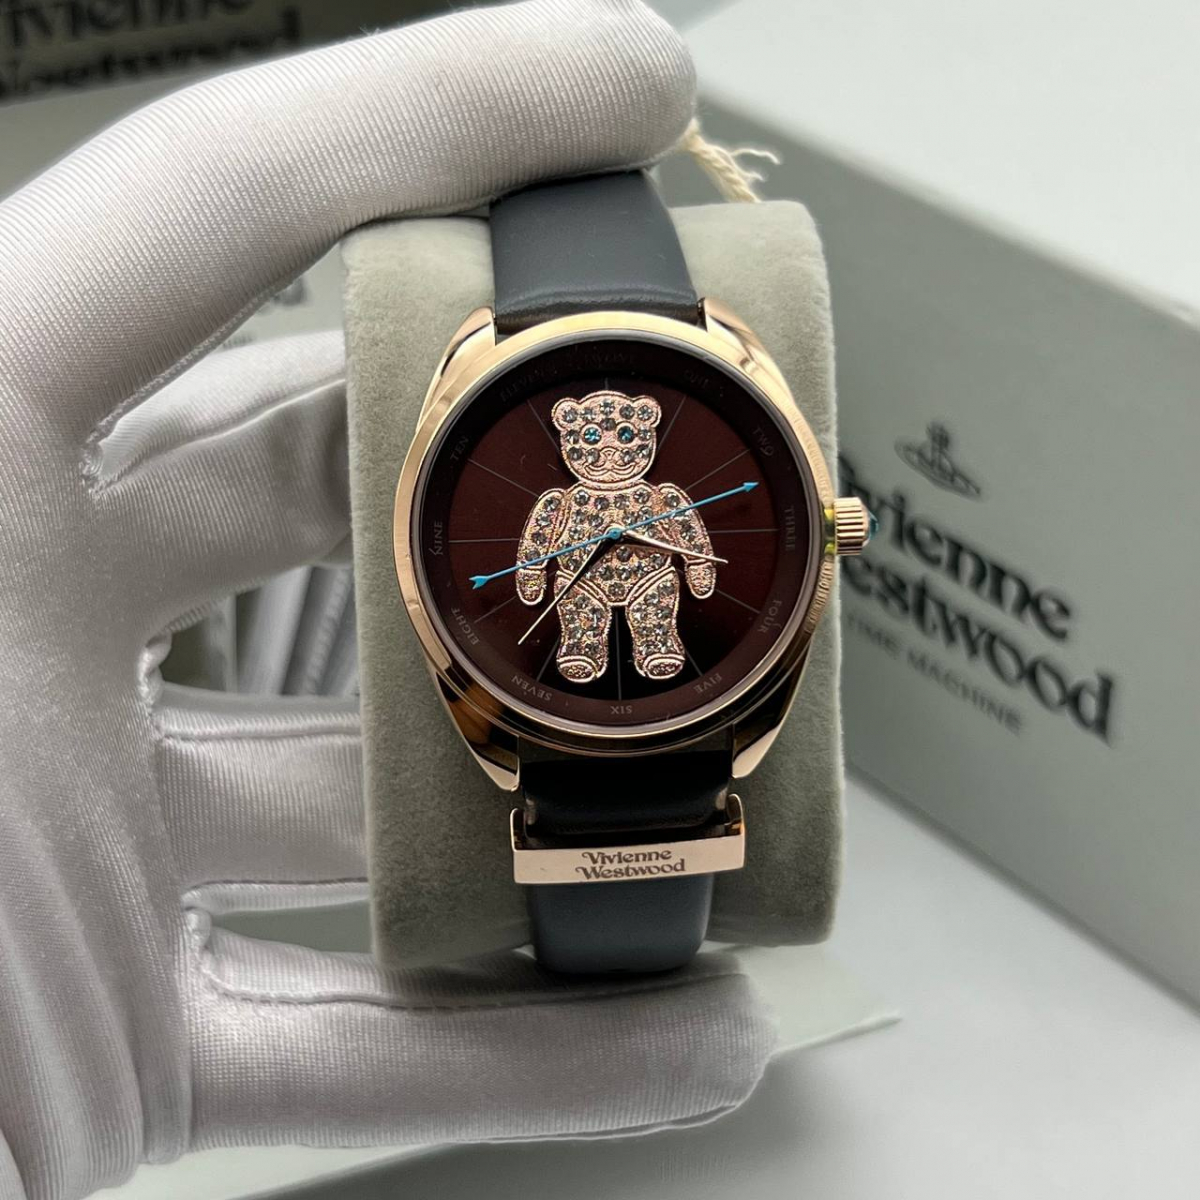 Vivienne Westwood часы люкс женские  в «Globestyle» арт.589616UX